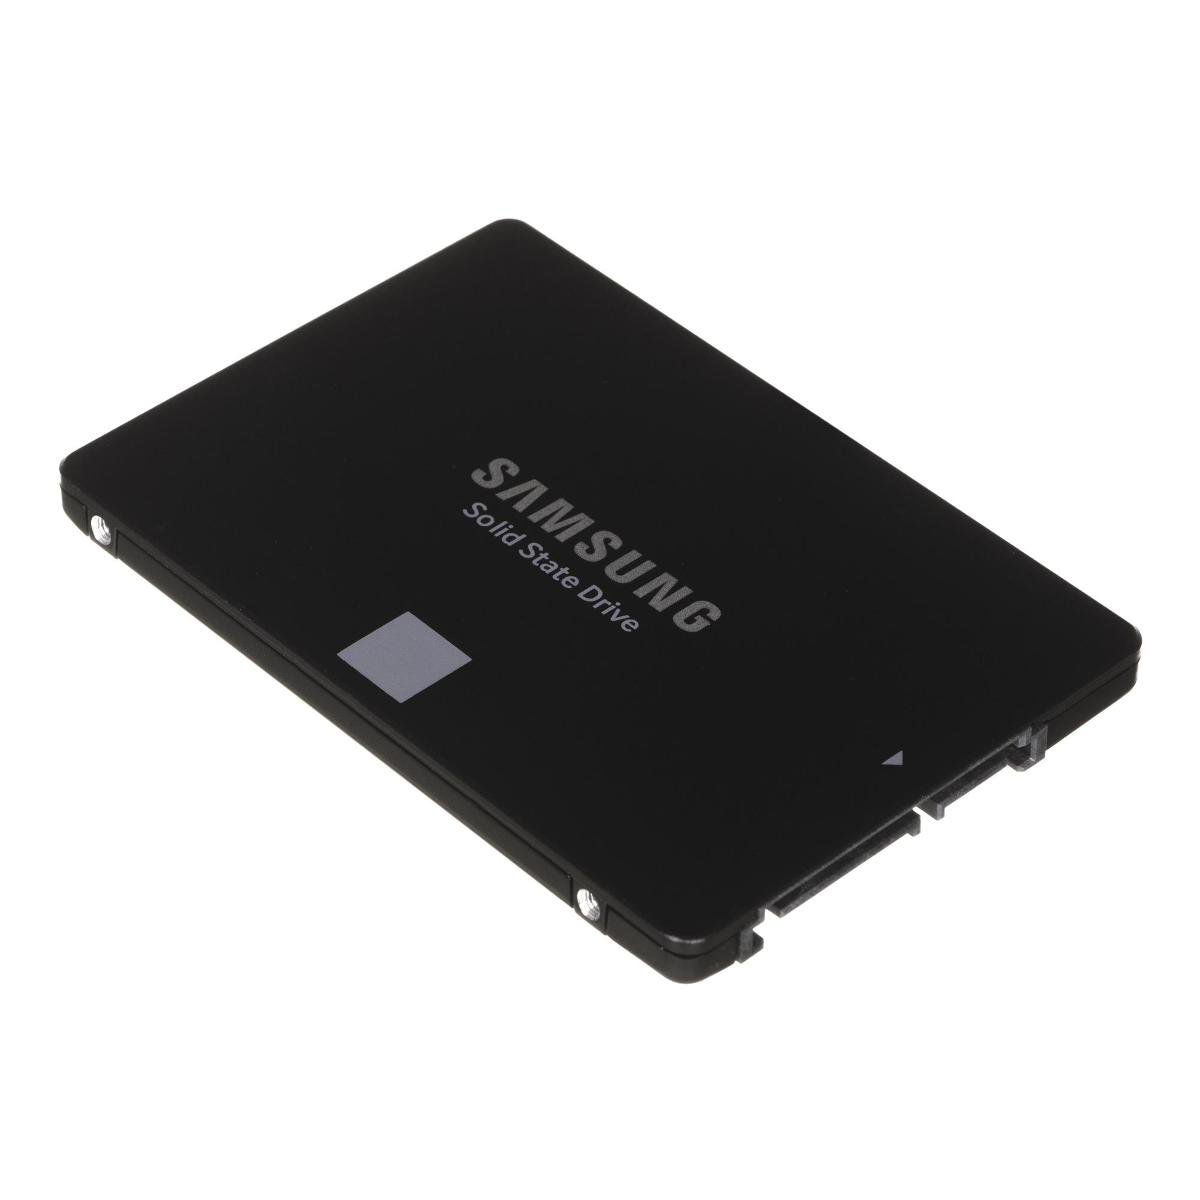 Накопителей samsung 860 evo. Твердотельный накопитель Samsung MZ-76e1t0bw. SSD накопитель Samsung 860 EVO 500gb. Твердотельный накопитель SSD 2.5 SATA-3 500gb Samsung 860 EVO. Жесткий диск SSD Samsung 860 EVO.